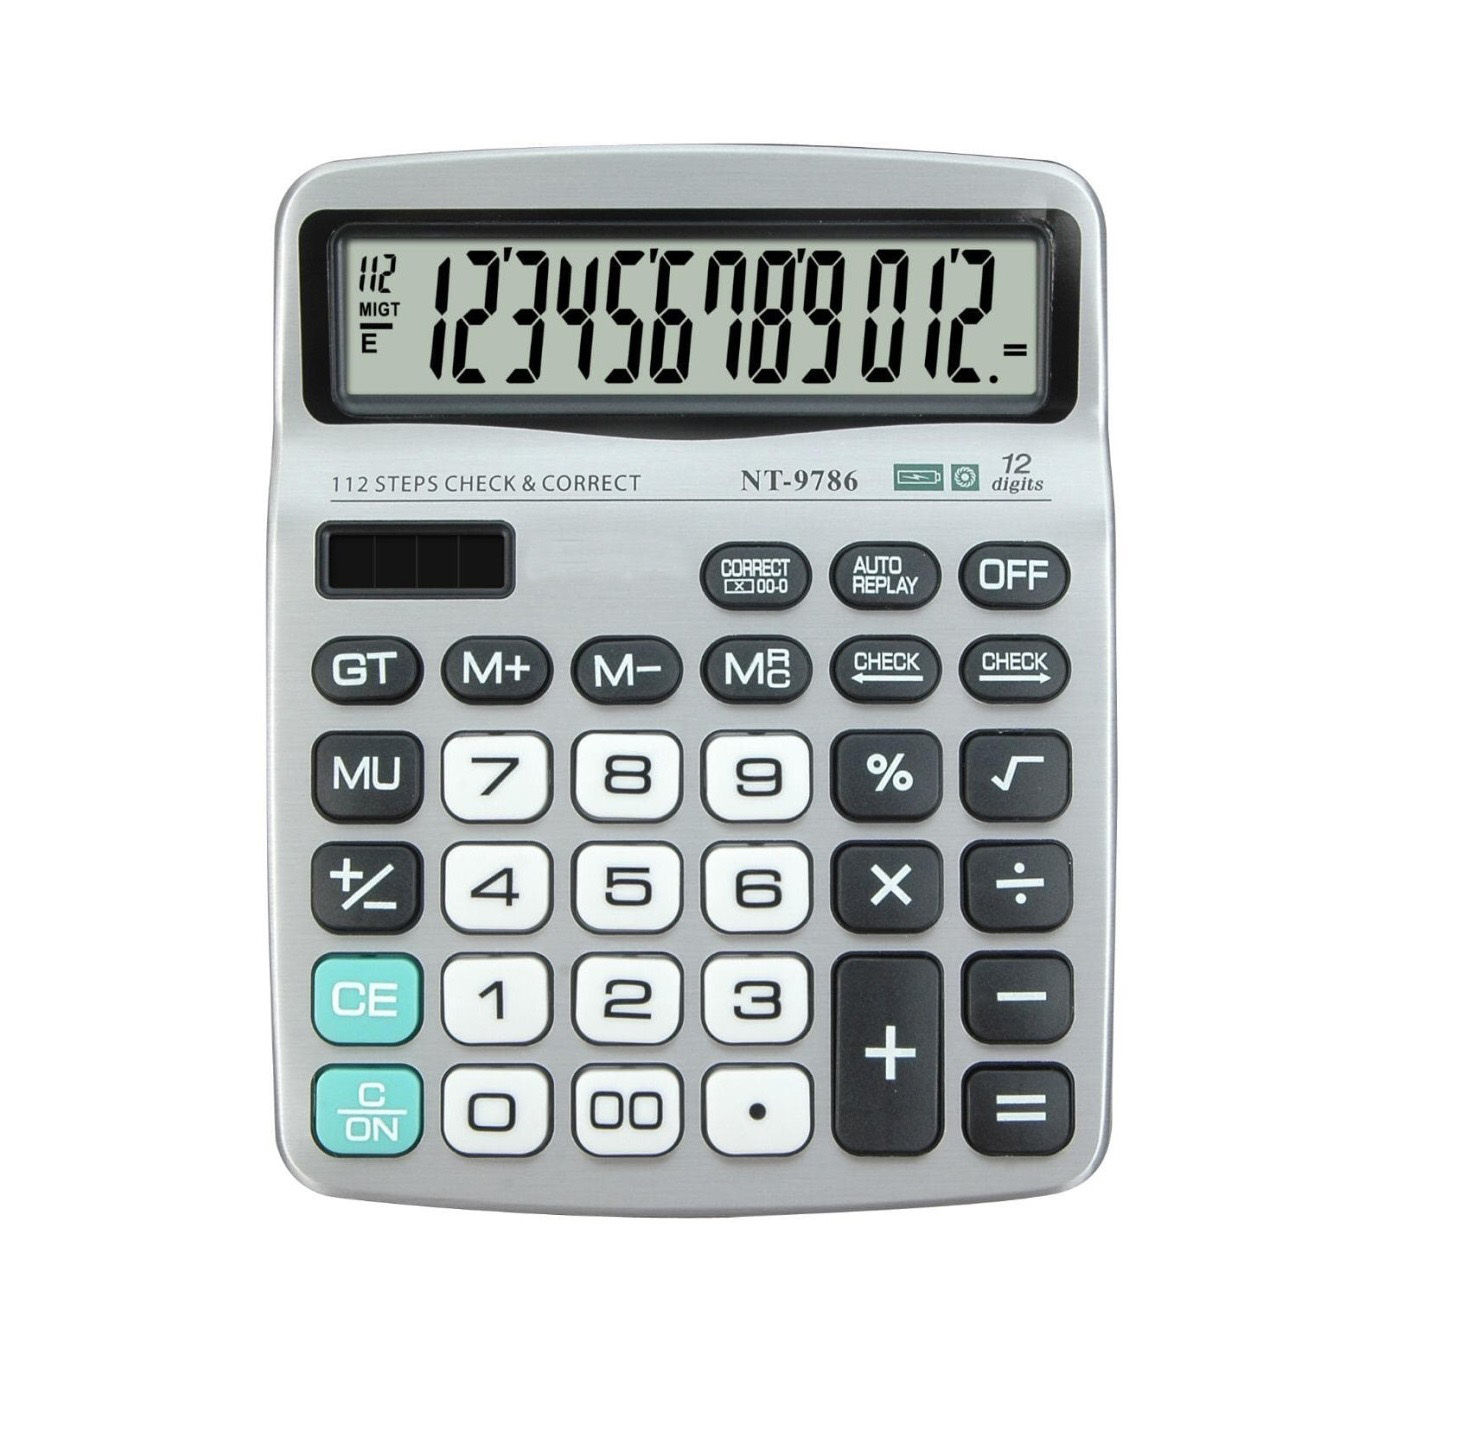 Calculator de Birou MRG MNT9786, 12 Digits , LCD , Verificare 112 Pasi